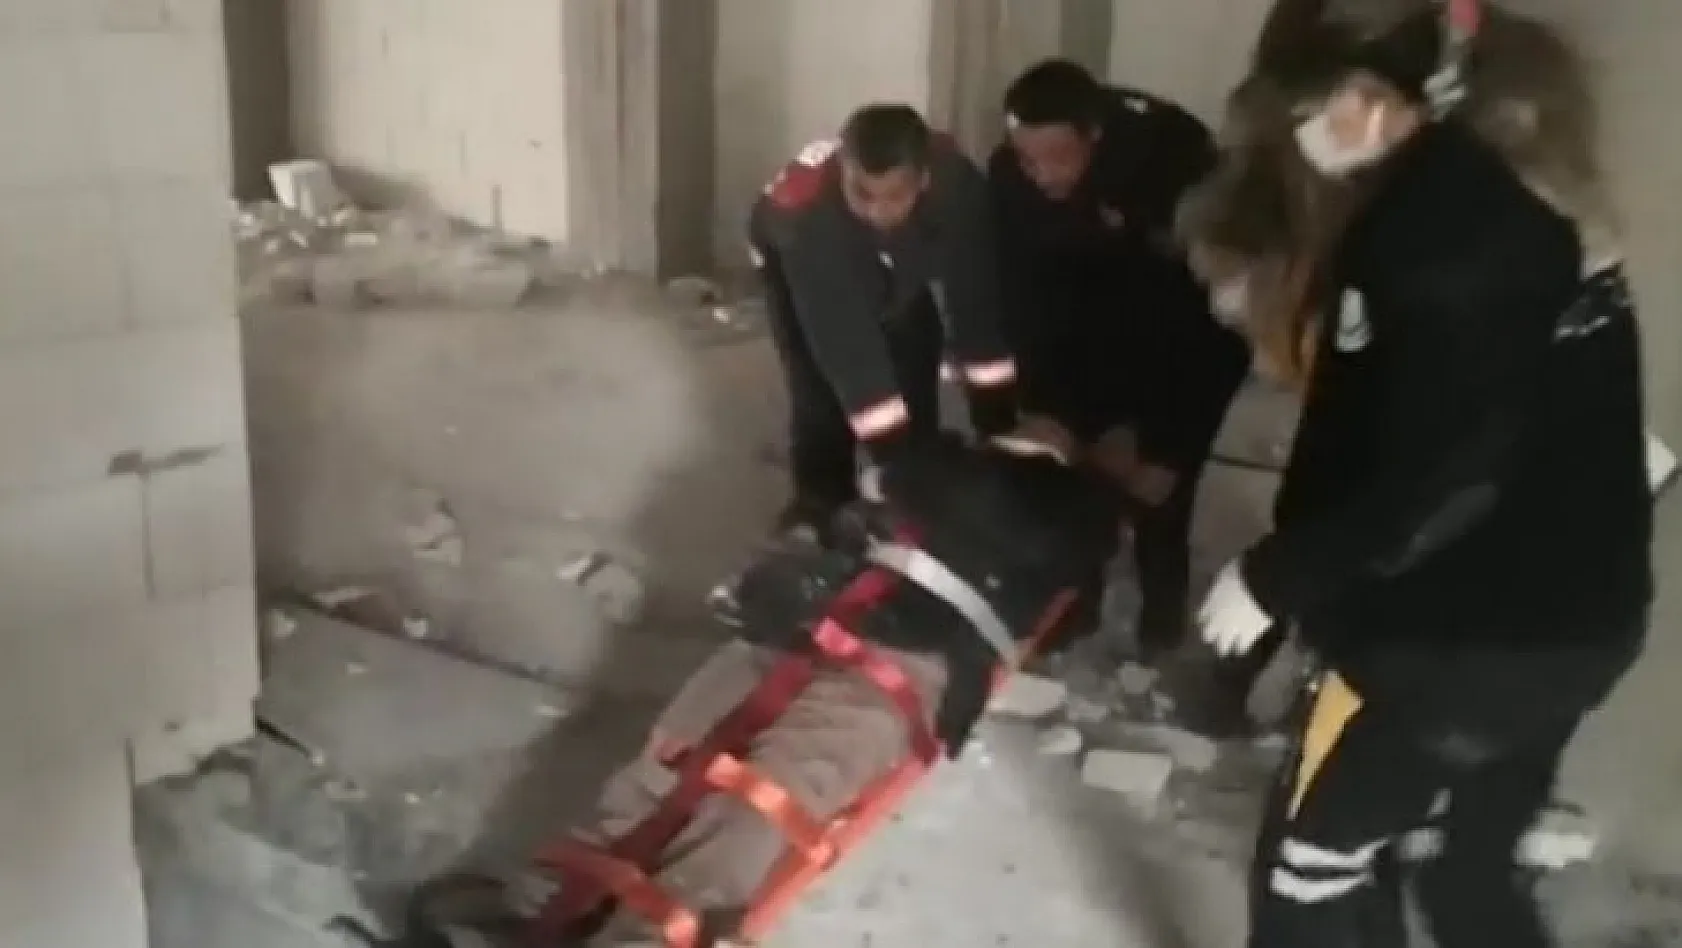 Malatya'da inşaatta düşen bir kişi yaralandı